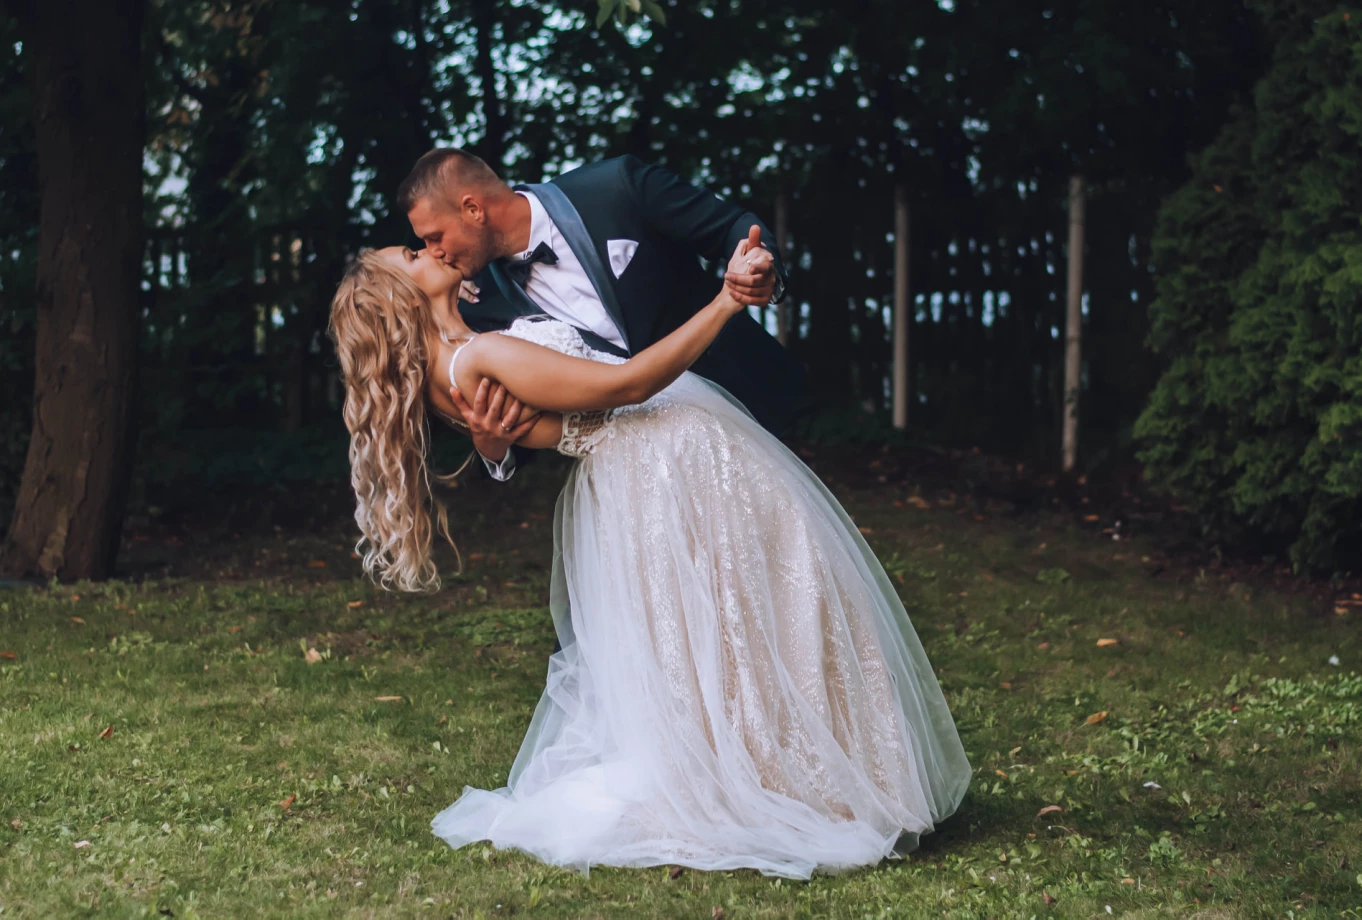 fotograf lodz alefotografie portfolio zdjecia slubne inspiracje wesele plener slubny sesja slubna